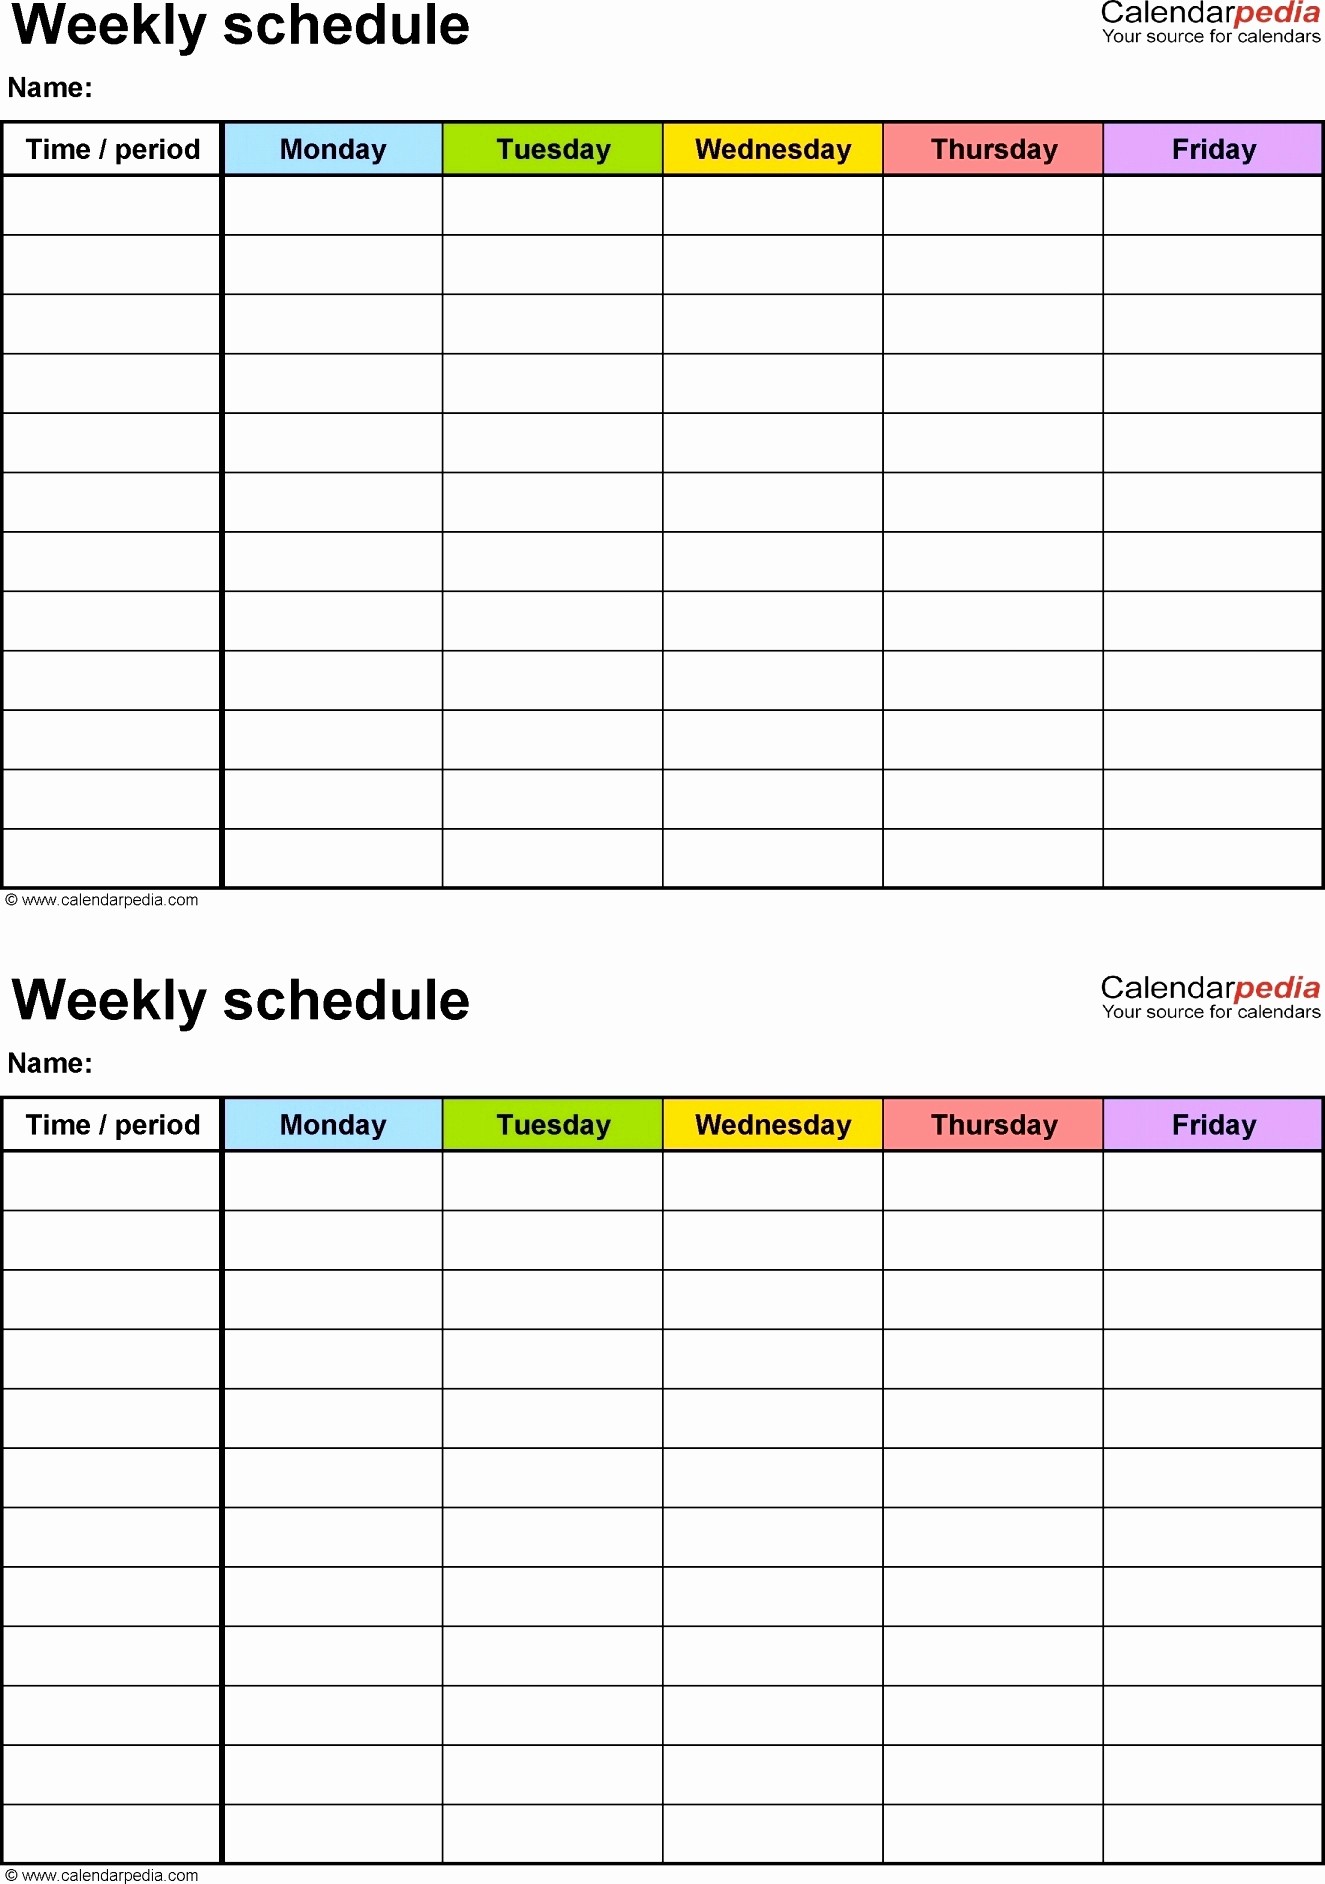 50 New Google Docs Calendar Spreadsheet Template DOCUMENTS IDEAS